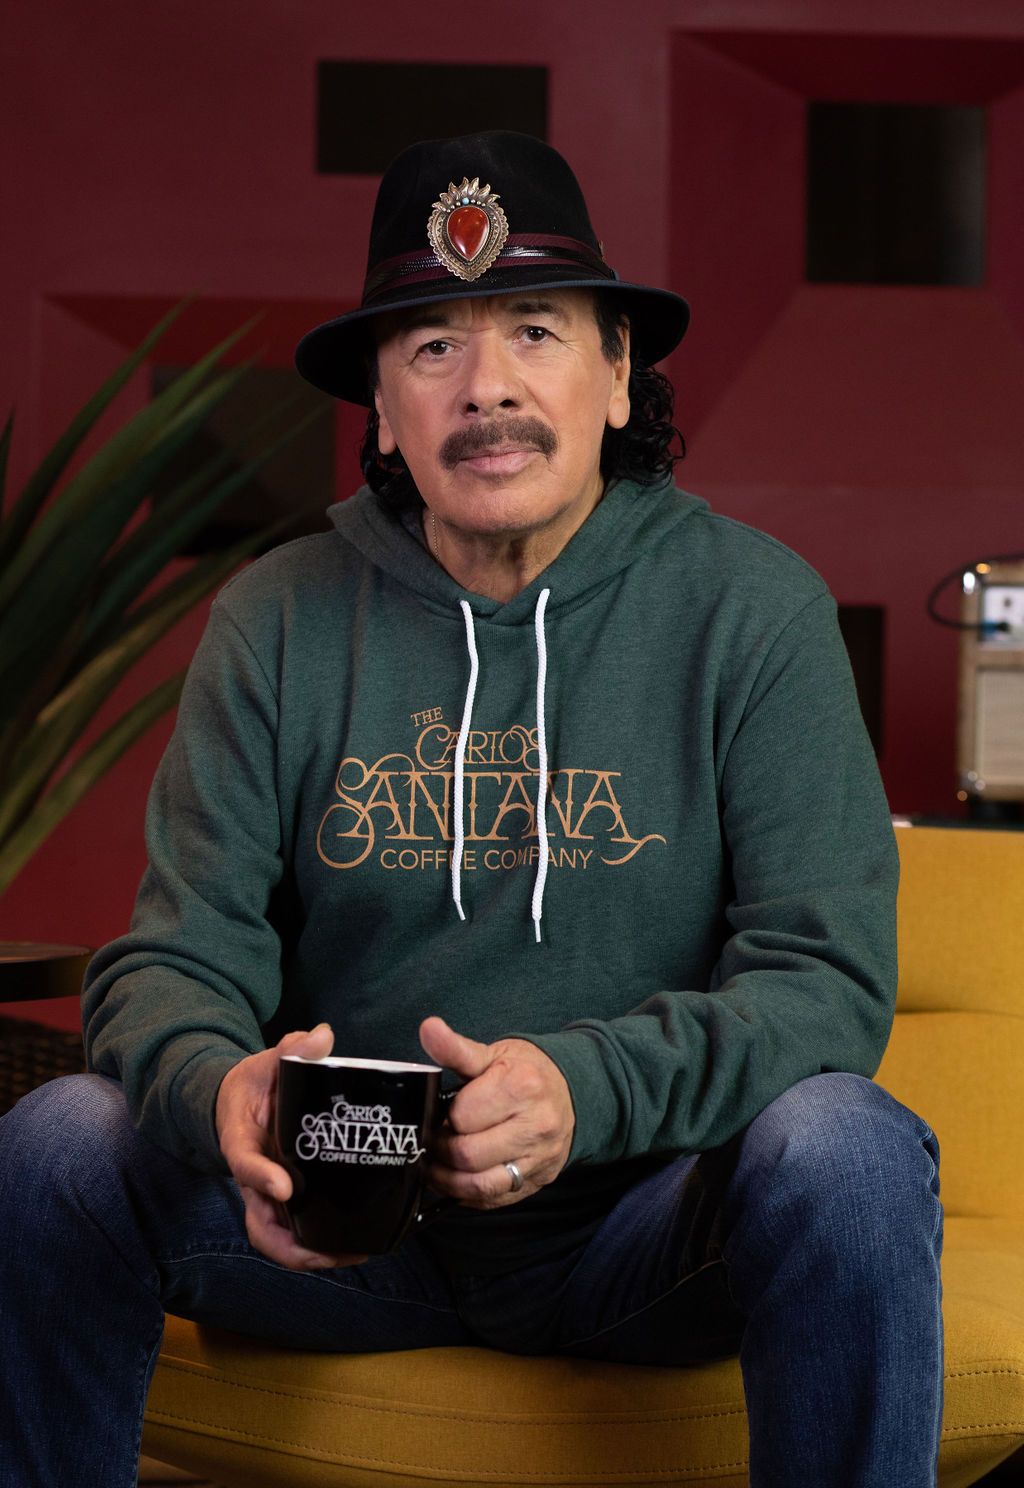 Carlos Santana coffee